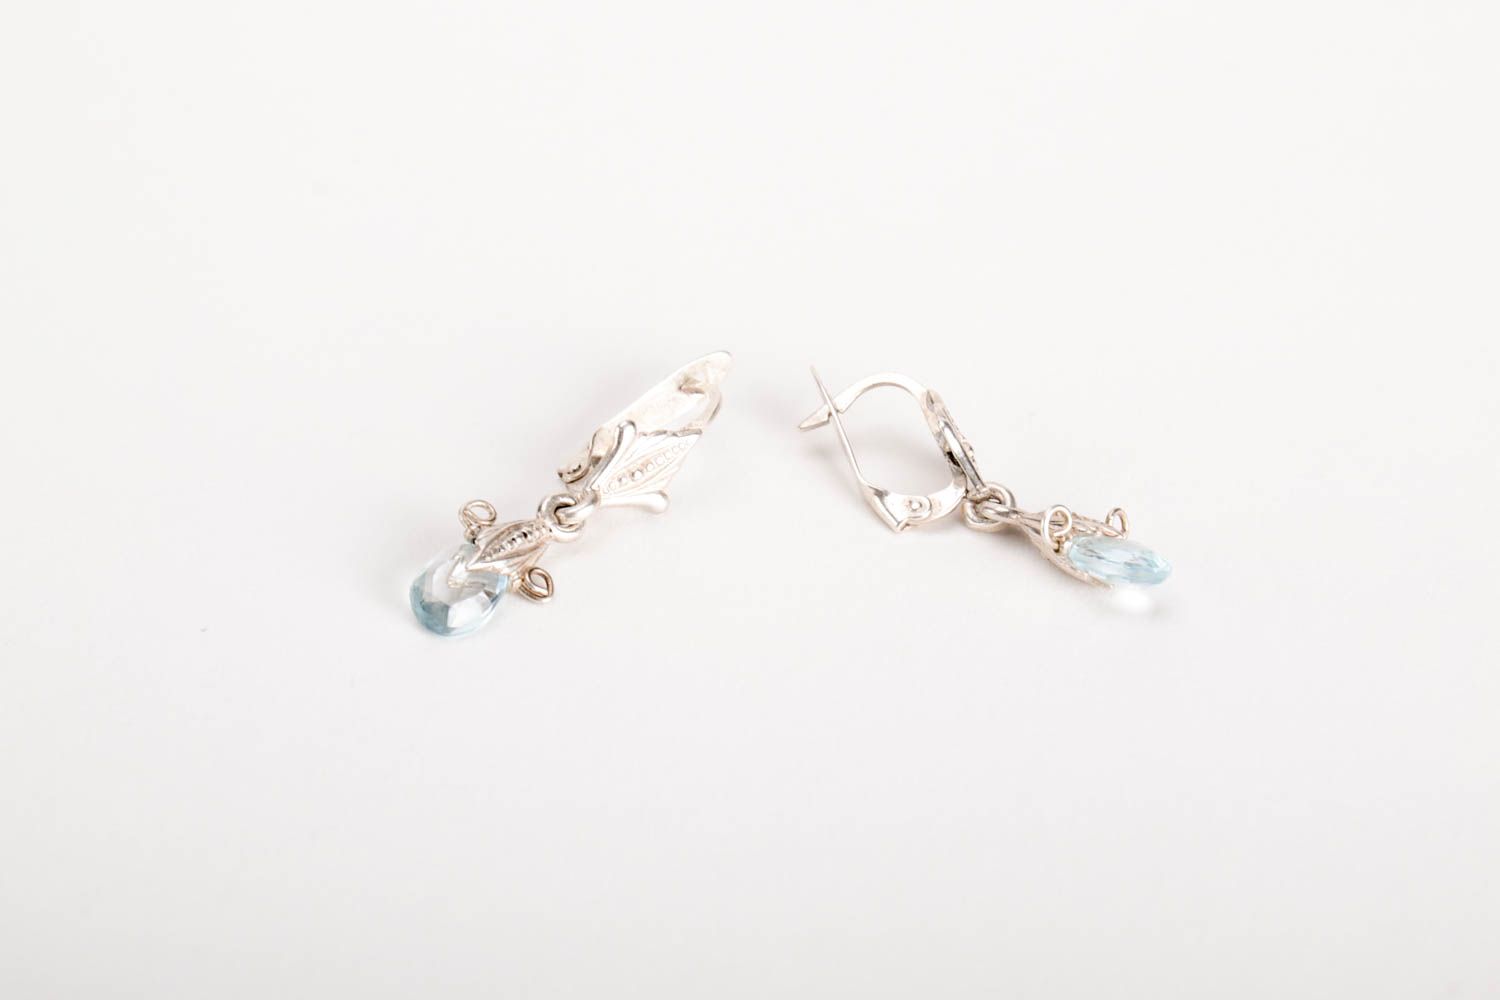 Unique earrings handmade jewelry silver earrings fashion accessories gift ideas photo 4